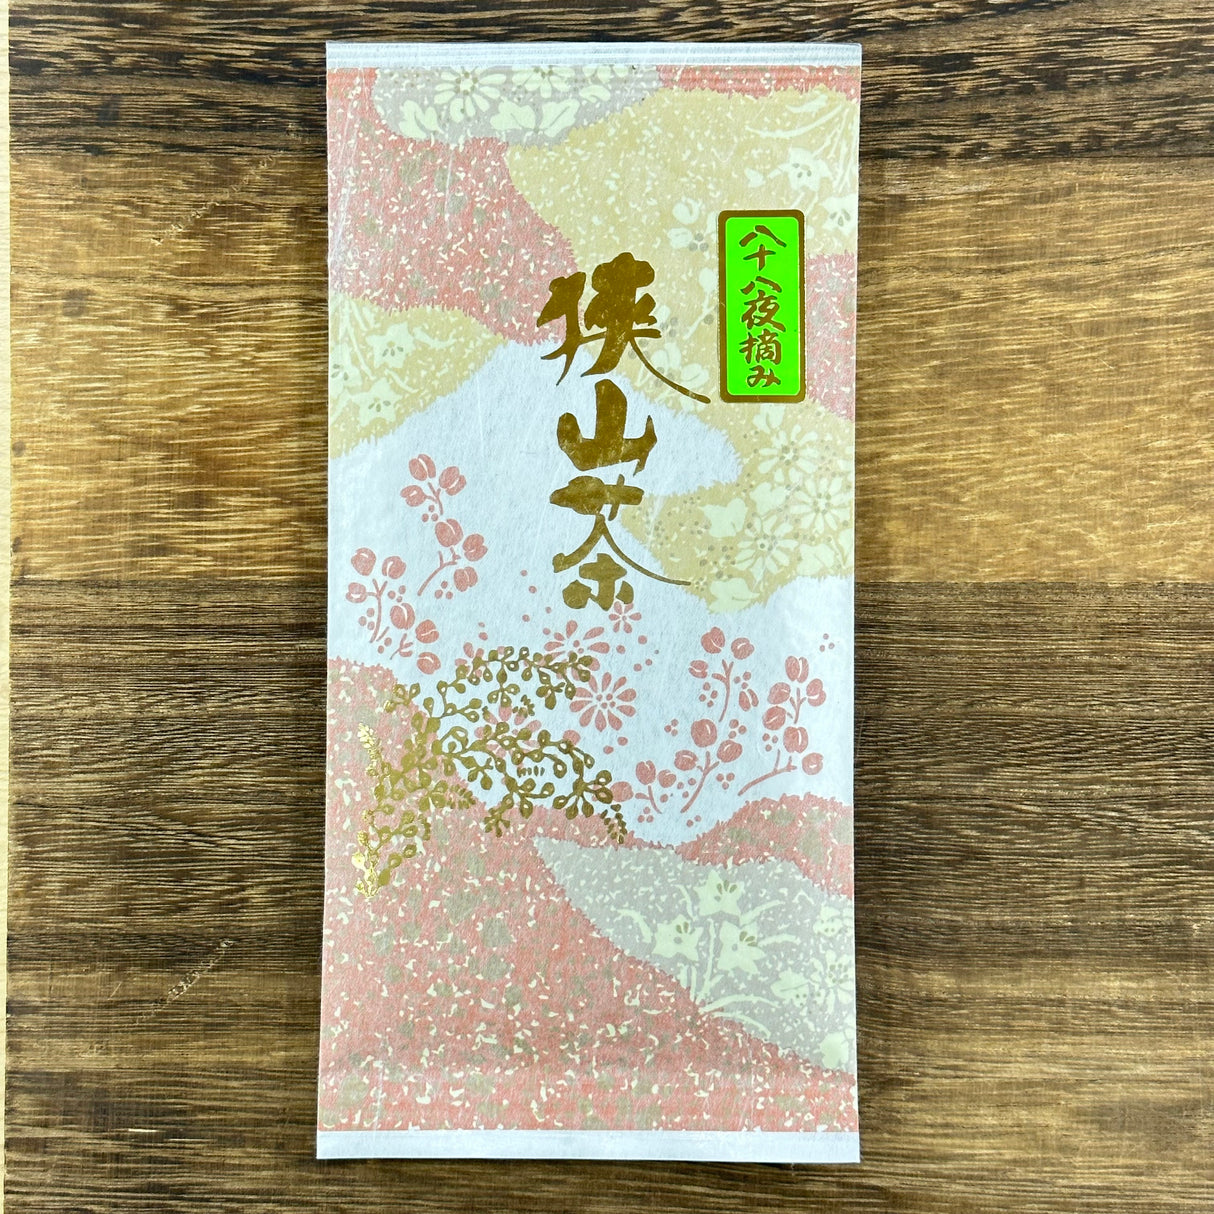 Yokota Tea Garden: Hatsutsumi (Hachijyuhachiya) Sayama Shincha Green Tea 狭山茶八十八夜摘み